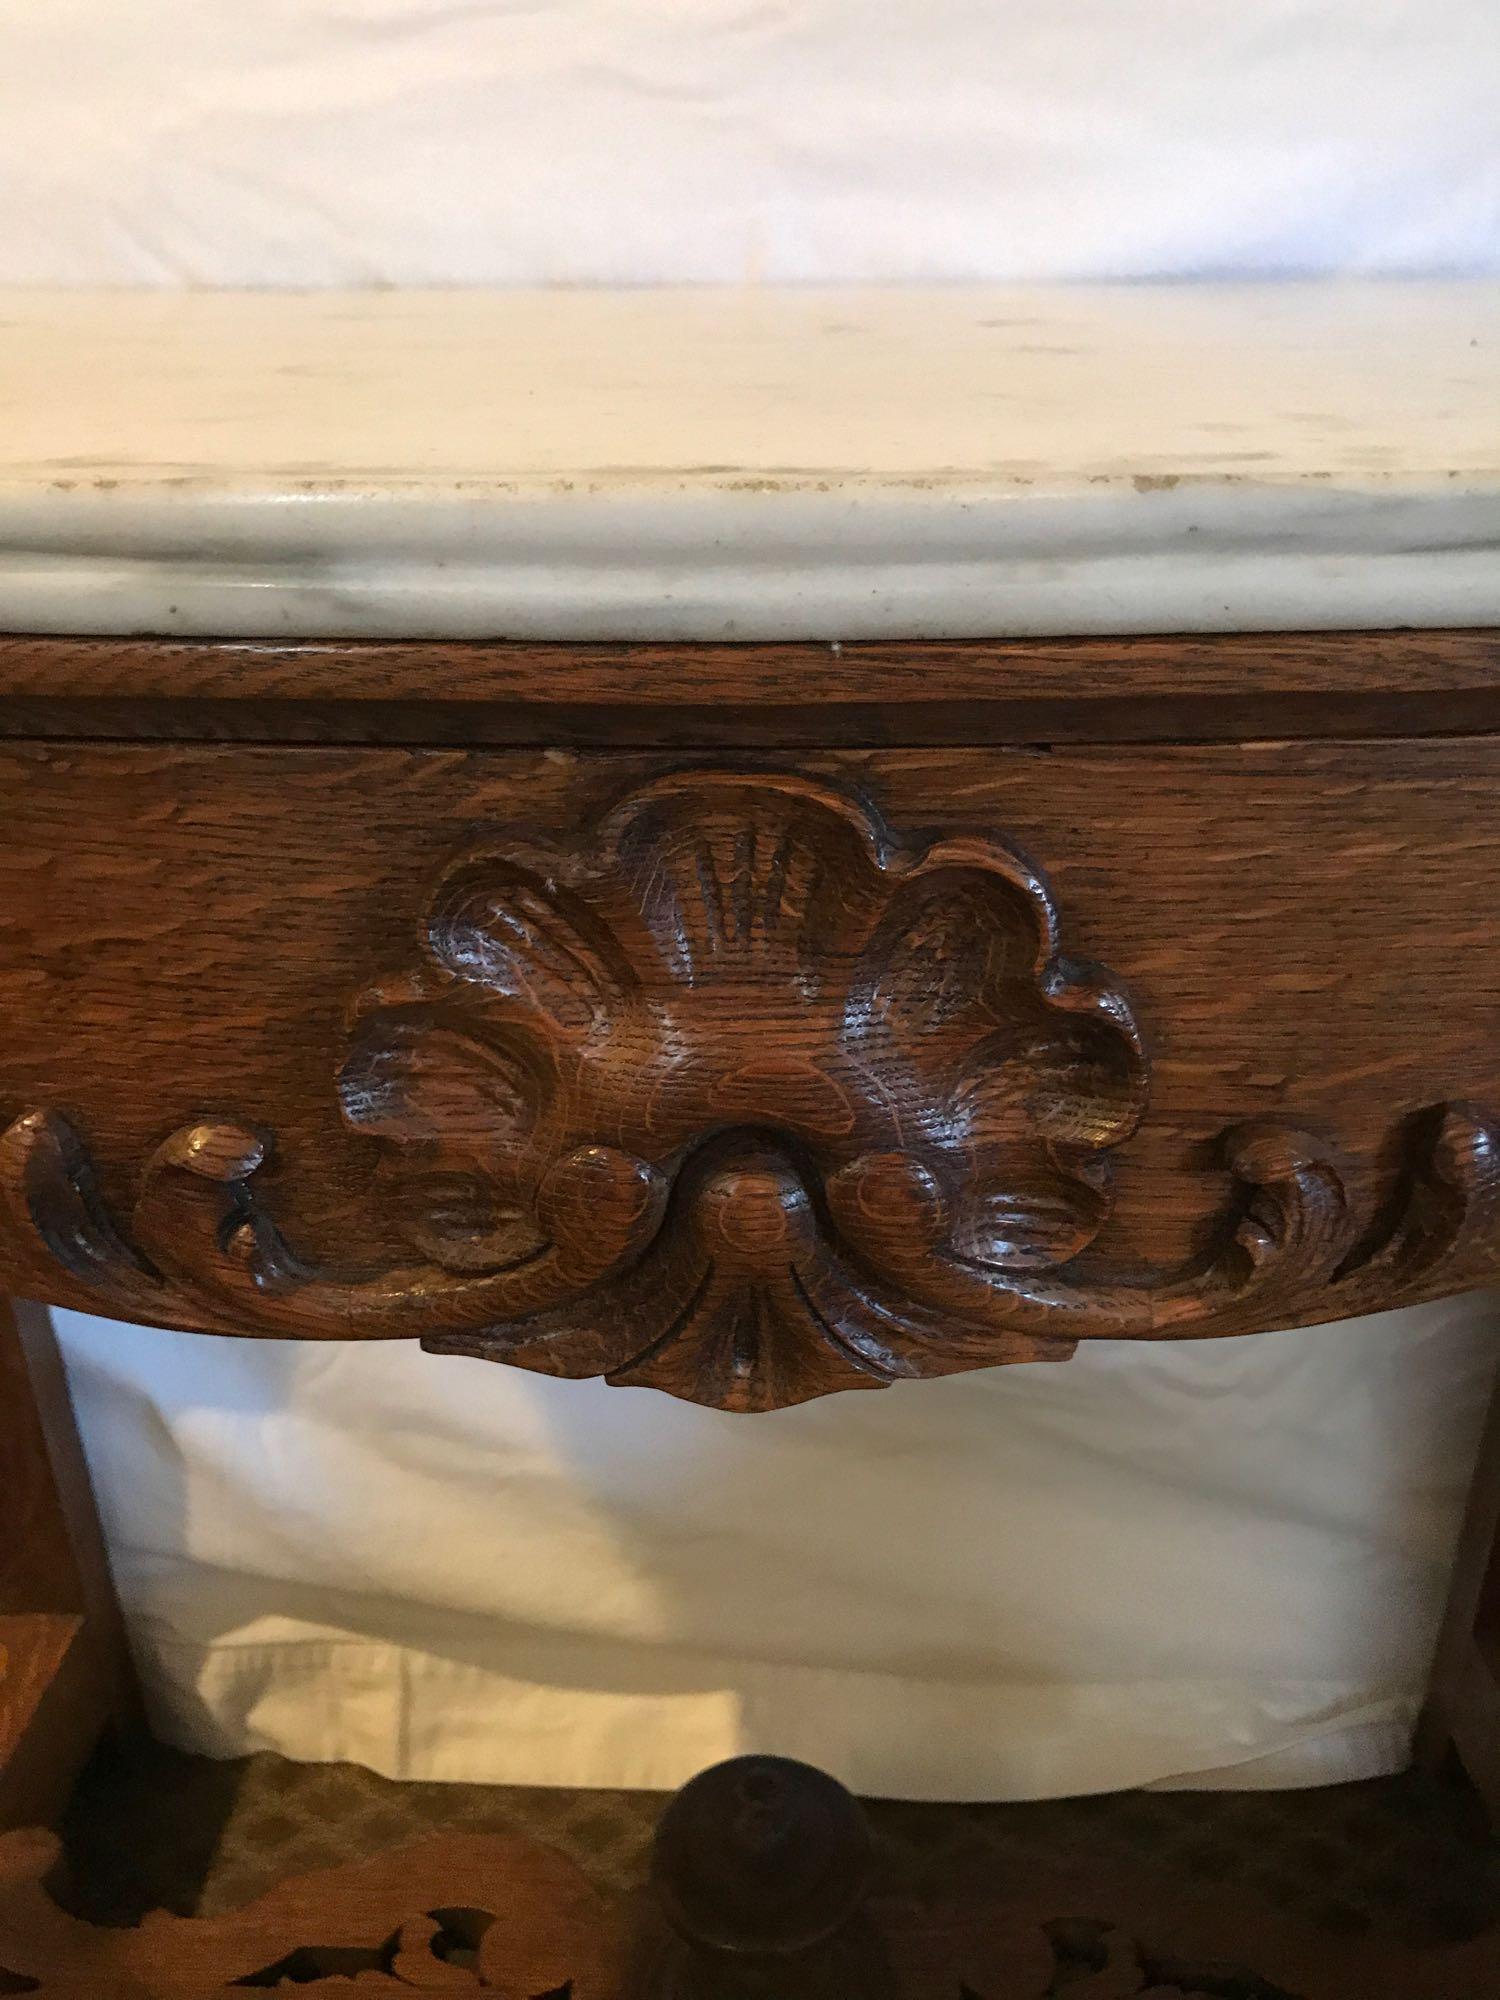 Antique Oak Marble top Foyer Table